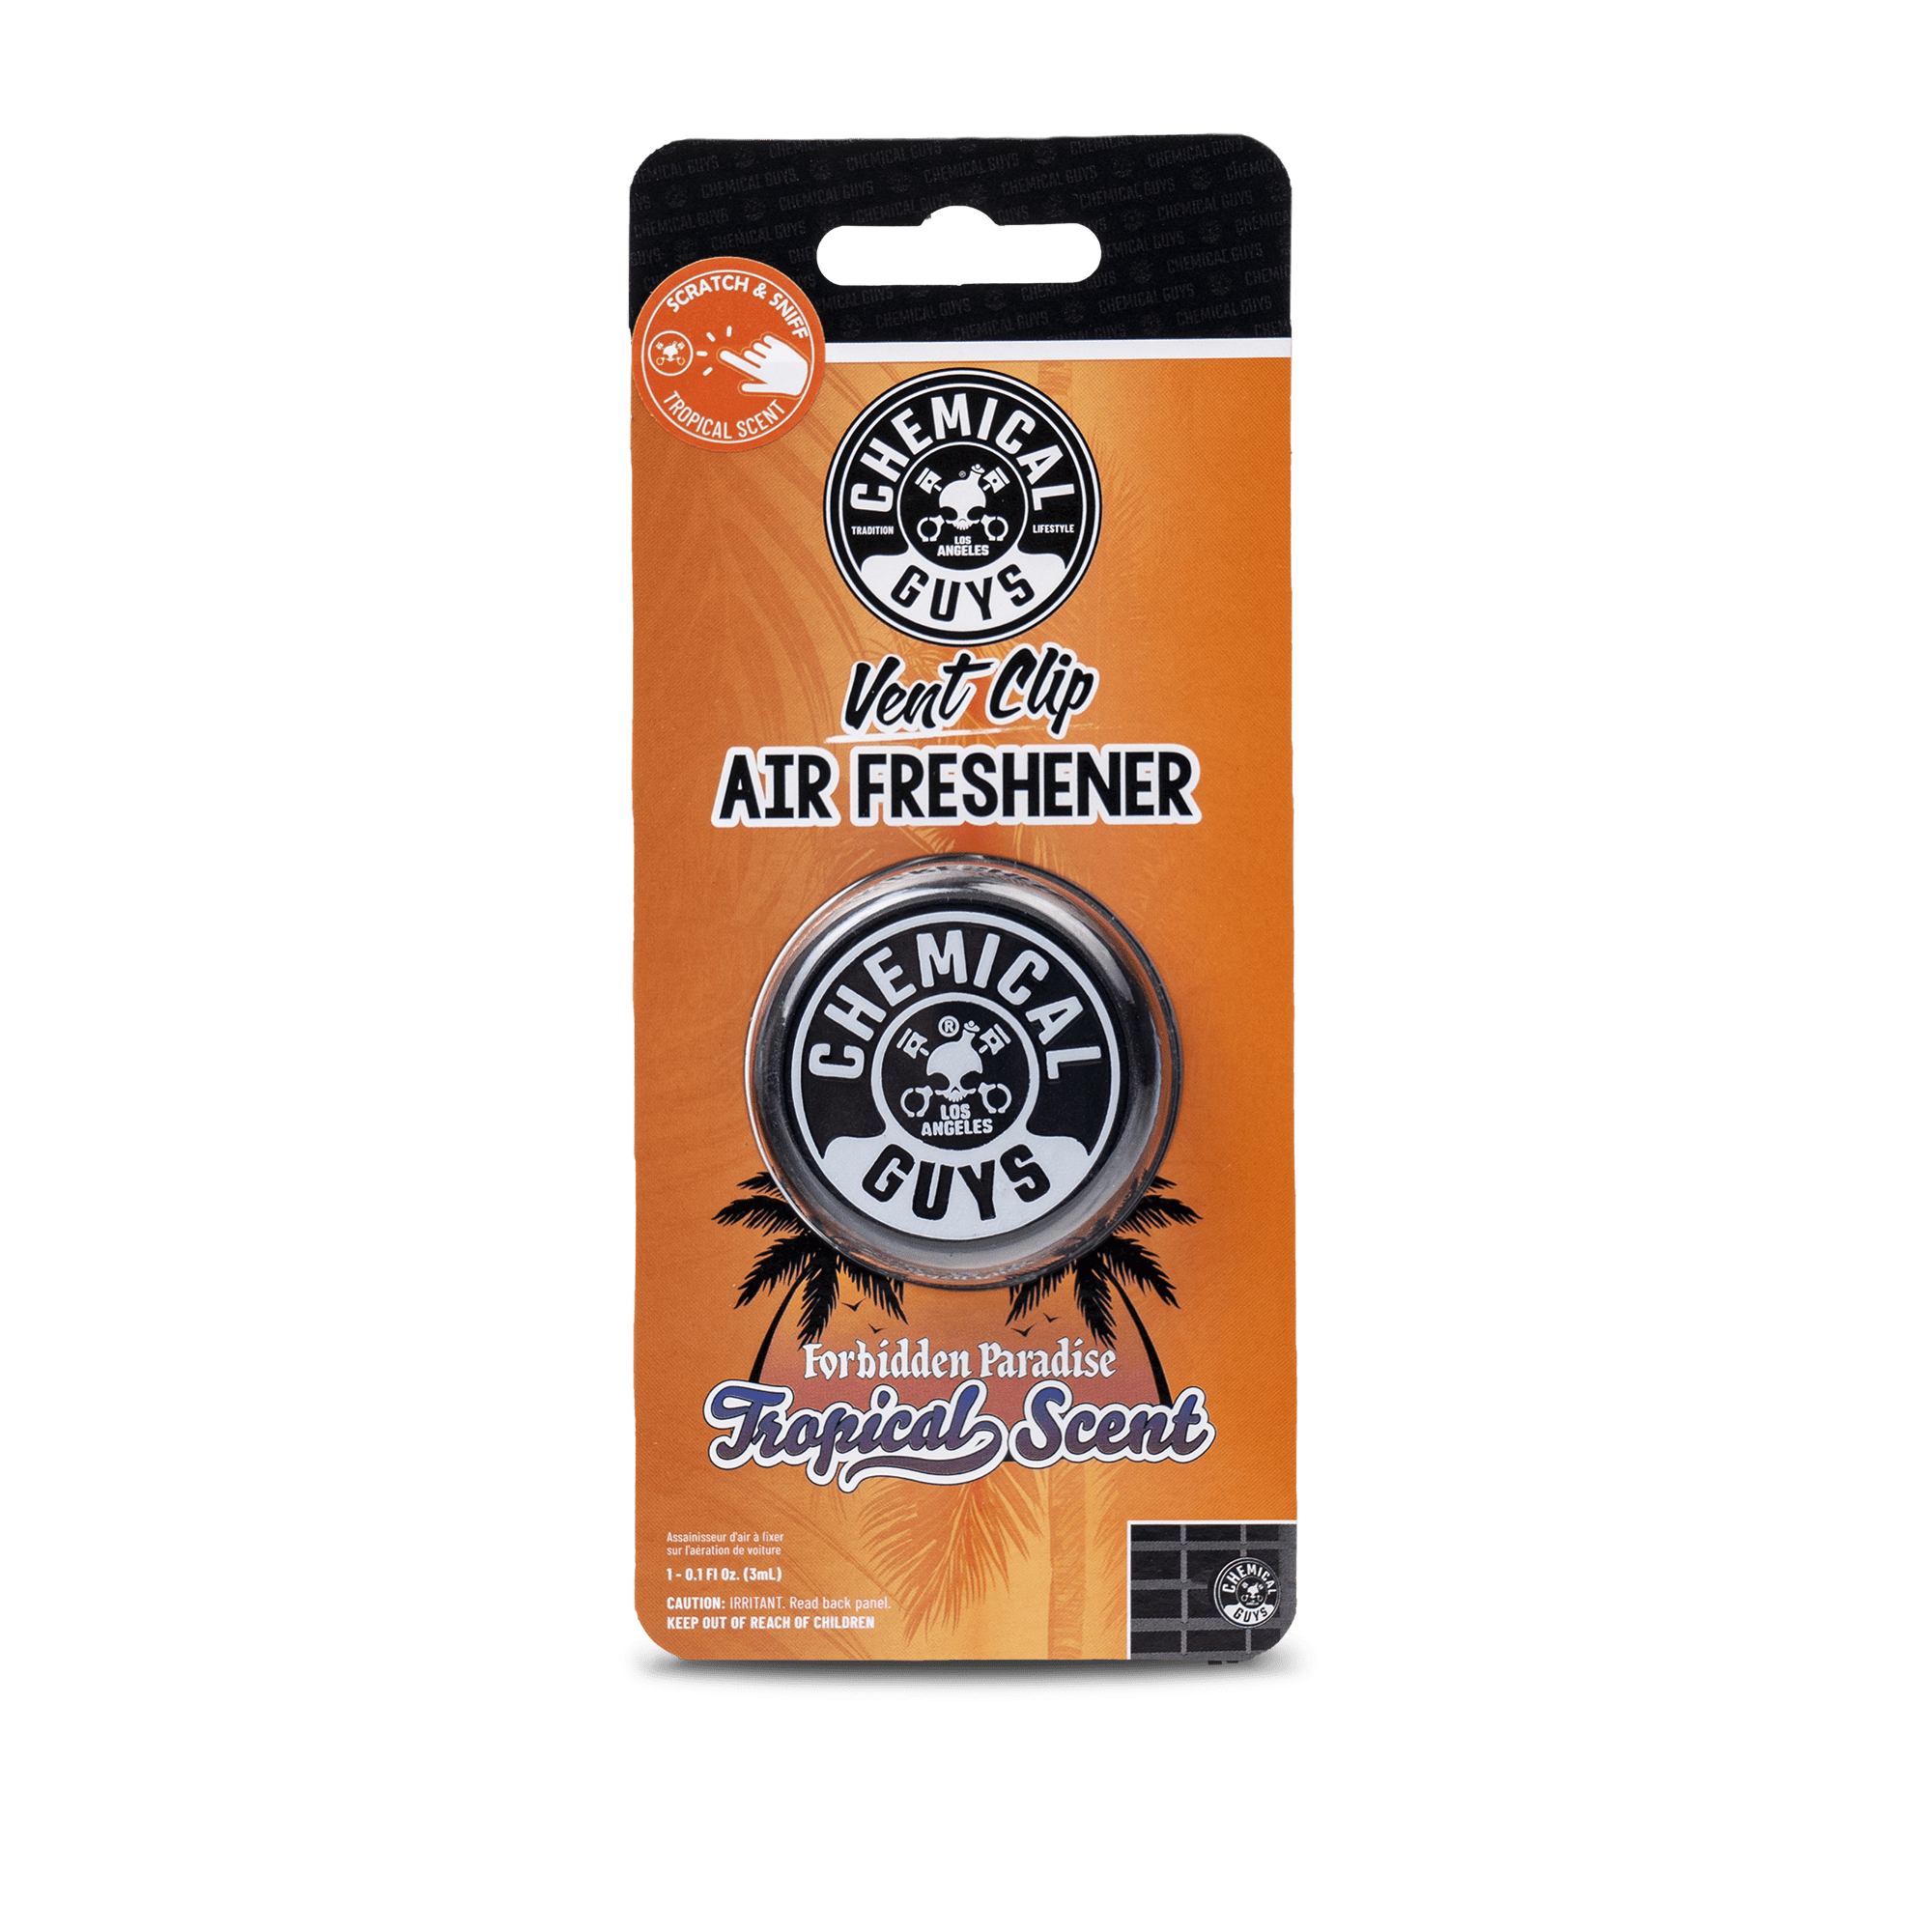 Chemical Guys Morning Wood Air Freshener & Odor Eliminator - 16oz